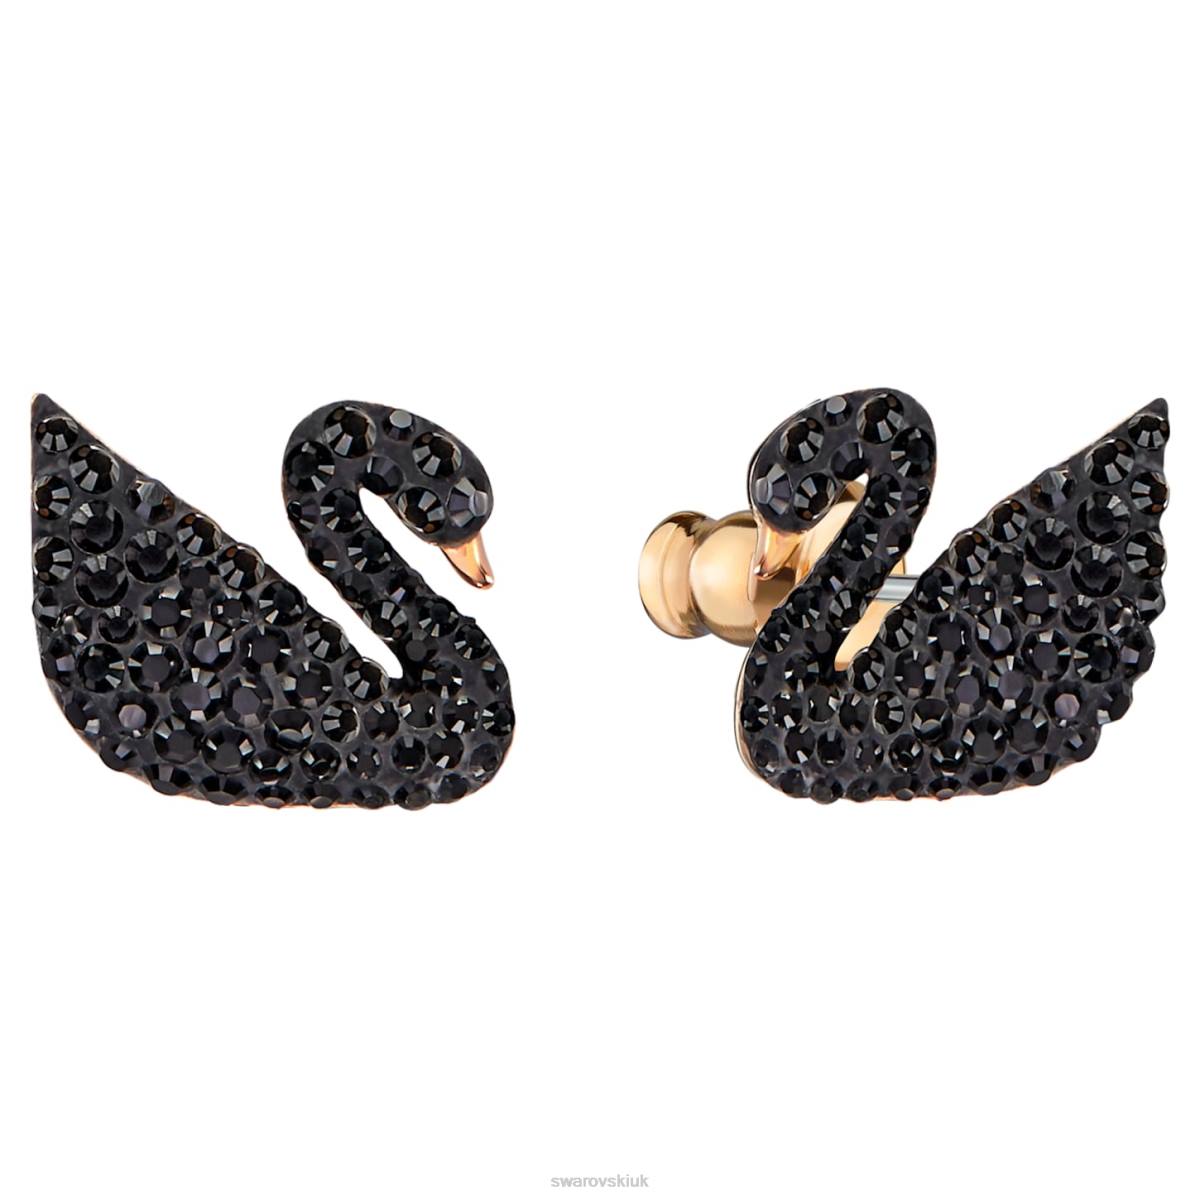 Jewelry Swarovski Iconic Swan earring jackets Swan, Black, Rose gold-tone plated 48JX964